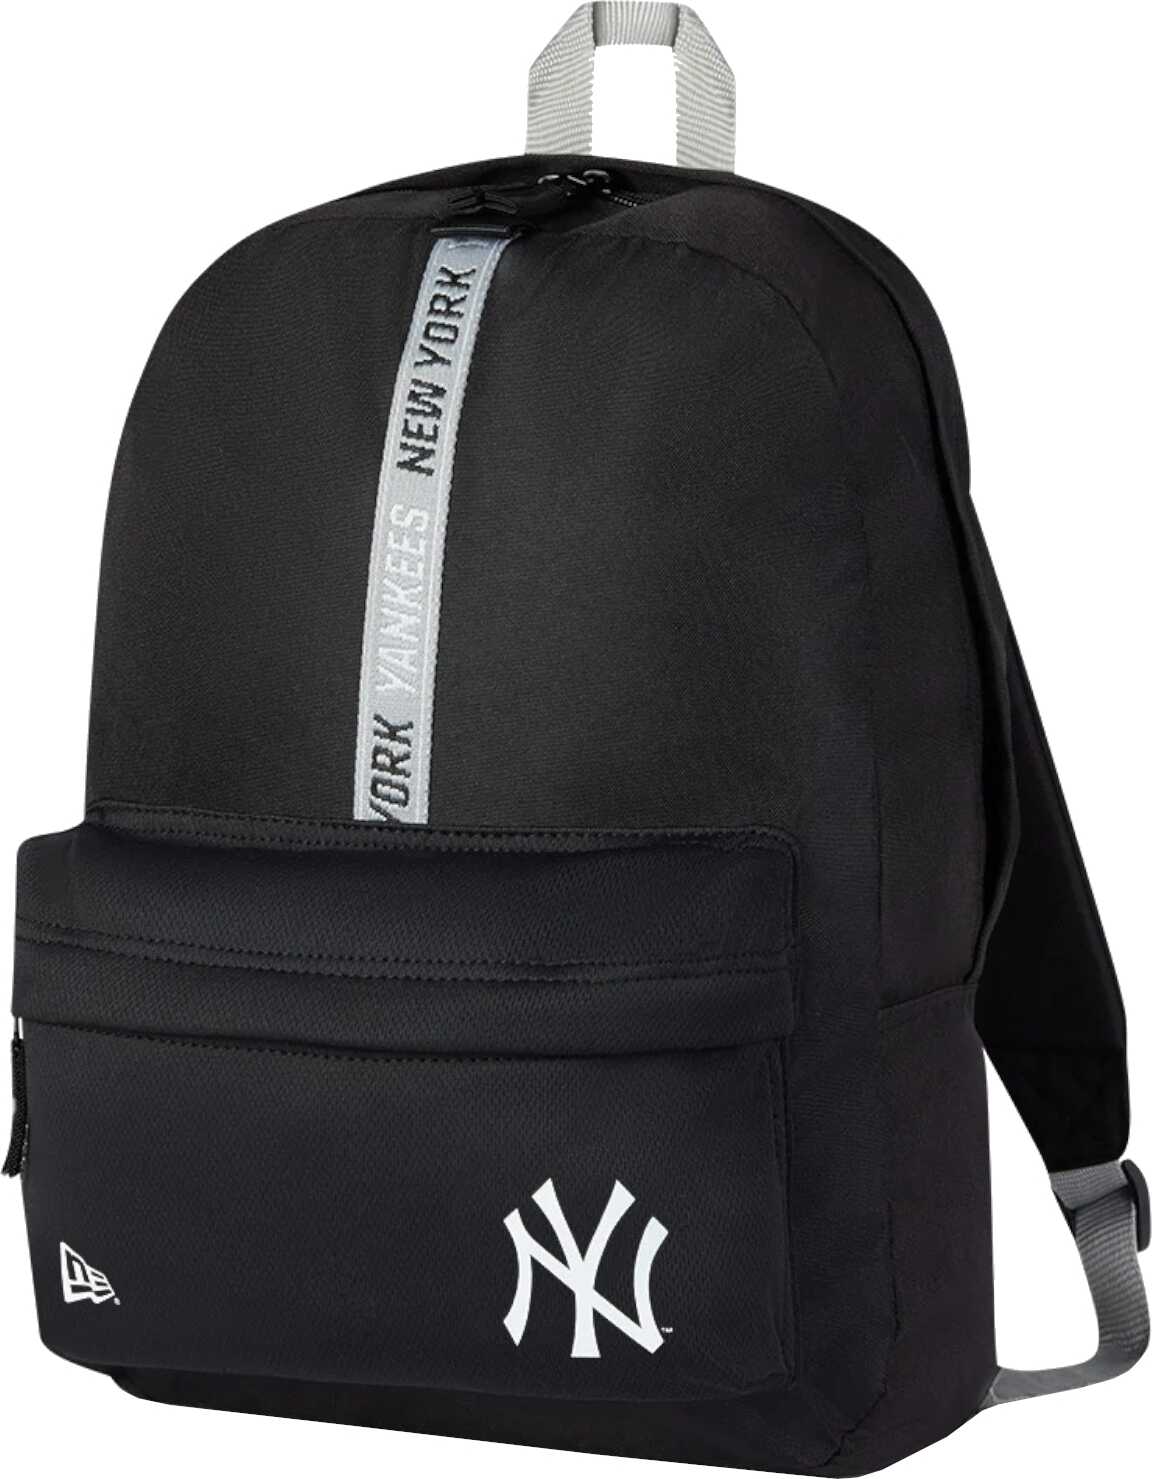 New Era MLB Stadium Bag Leisure Tech New York Yankees Backpack Black